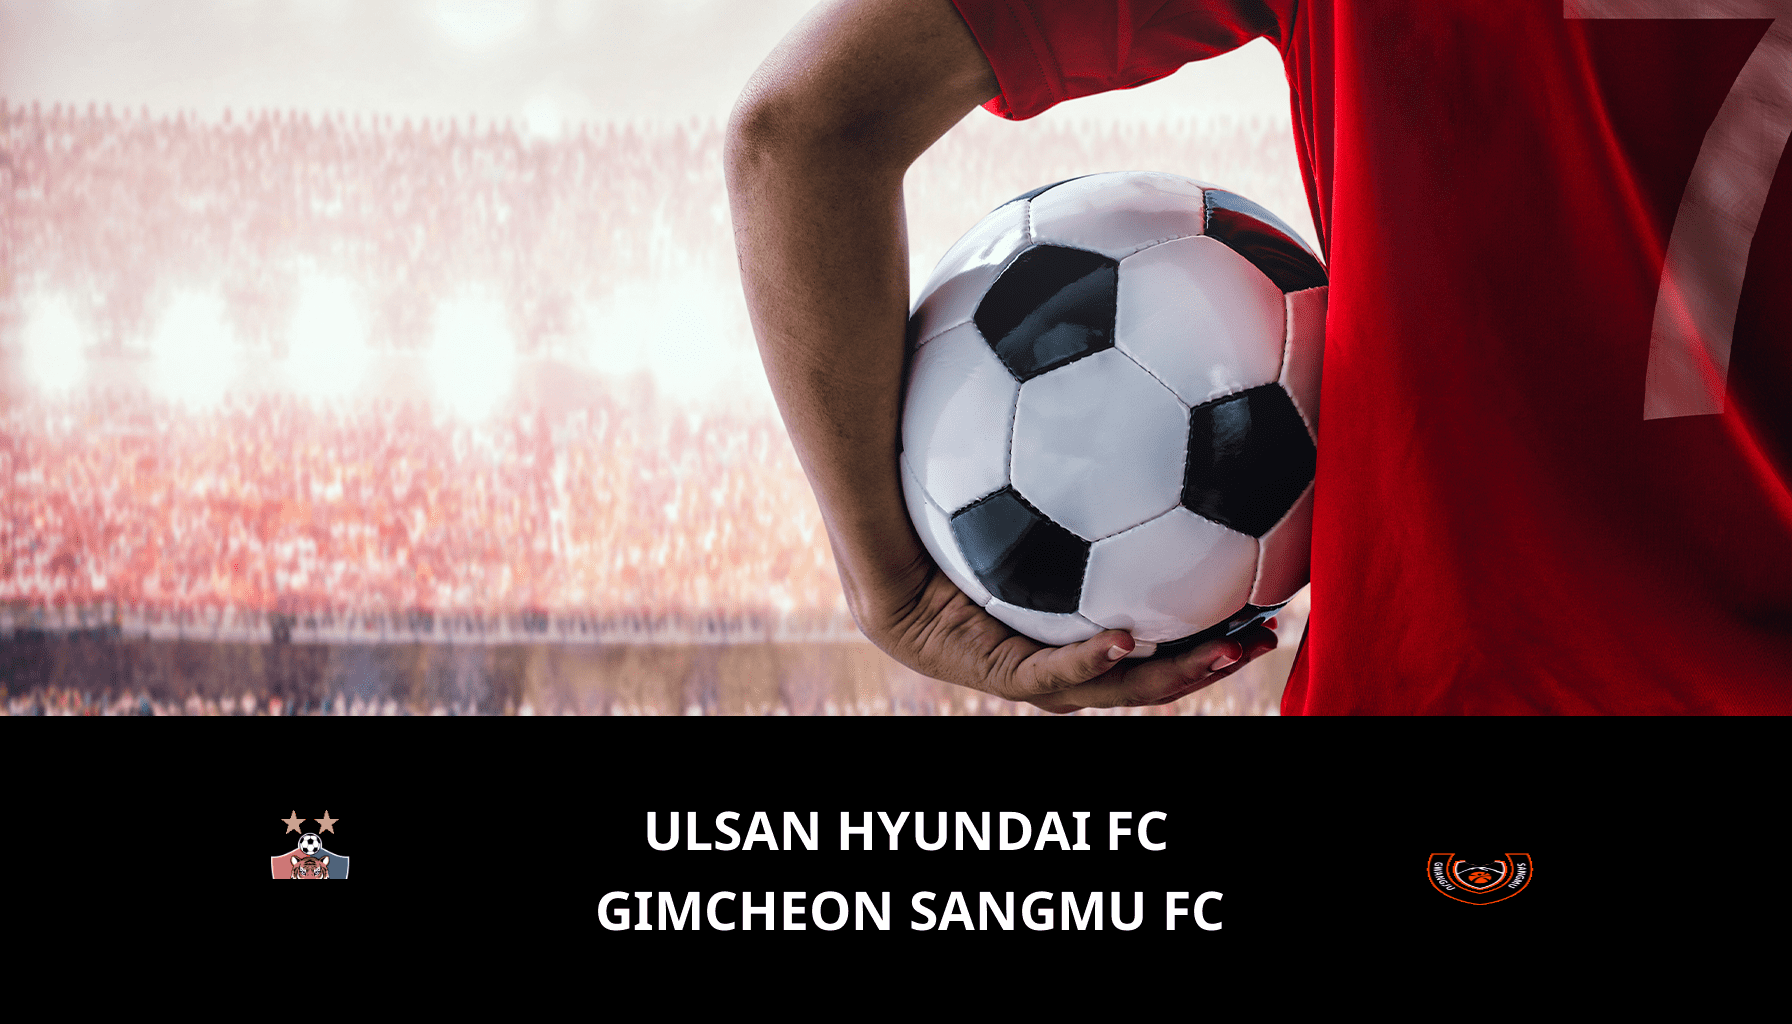 Previsione per Ulsan Hyundai FC VS Gimcheon Sangmu FC il 12/05/2024 Analysis of the match